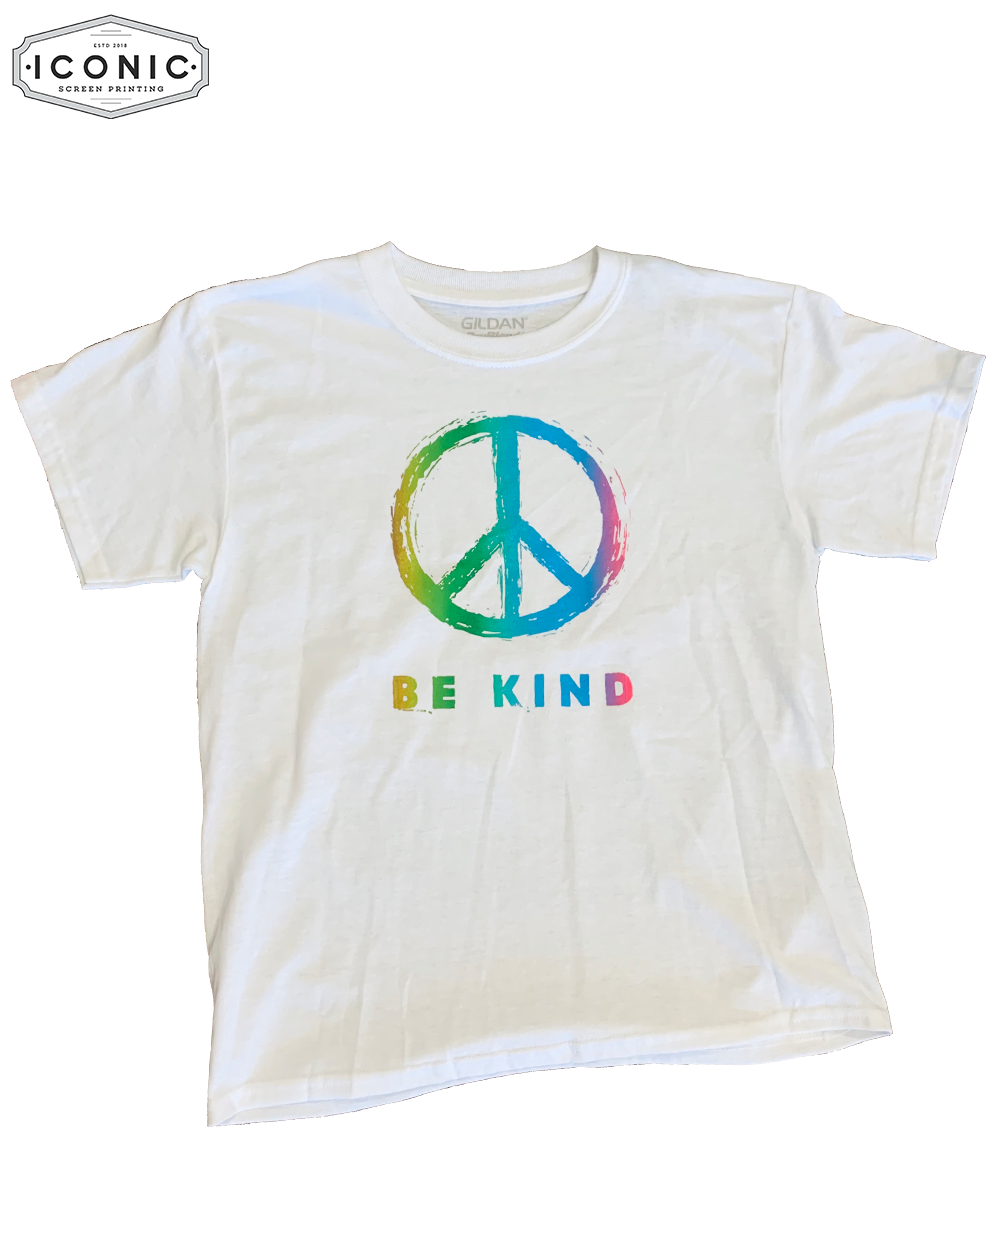 Be Kind - DryBlend T-shirt - Clearance